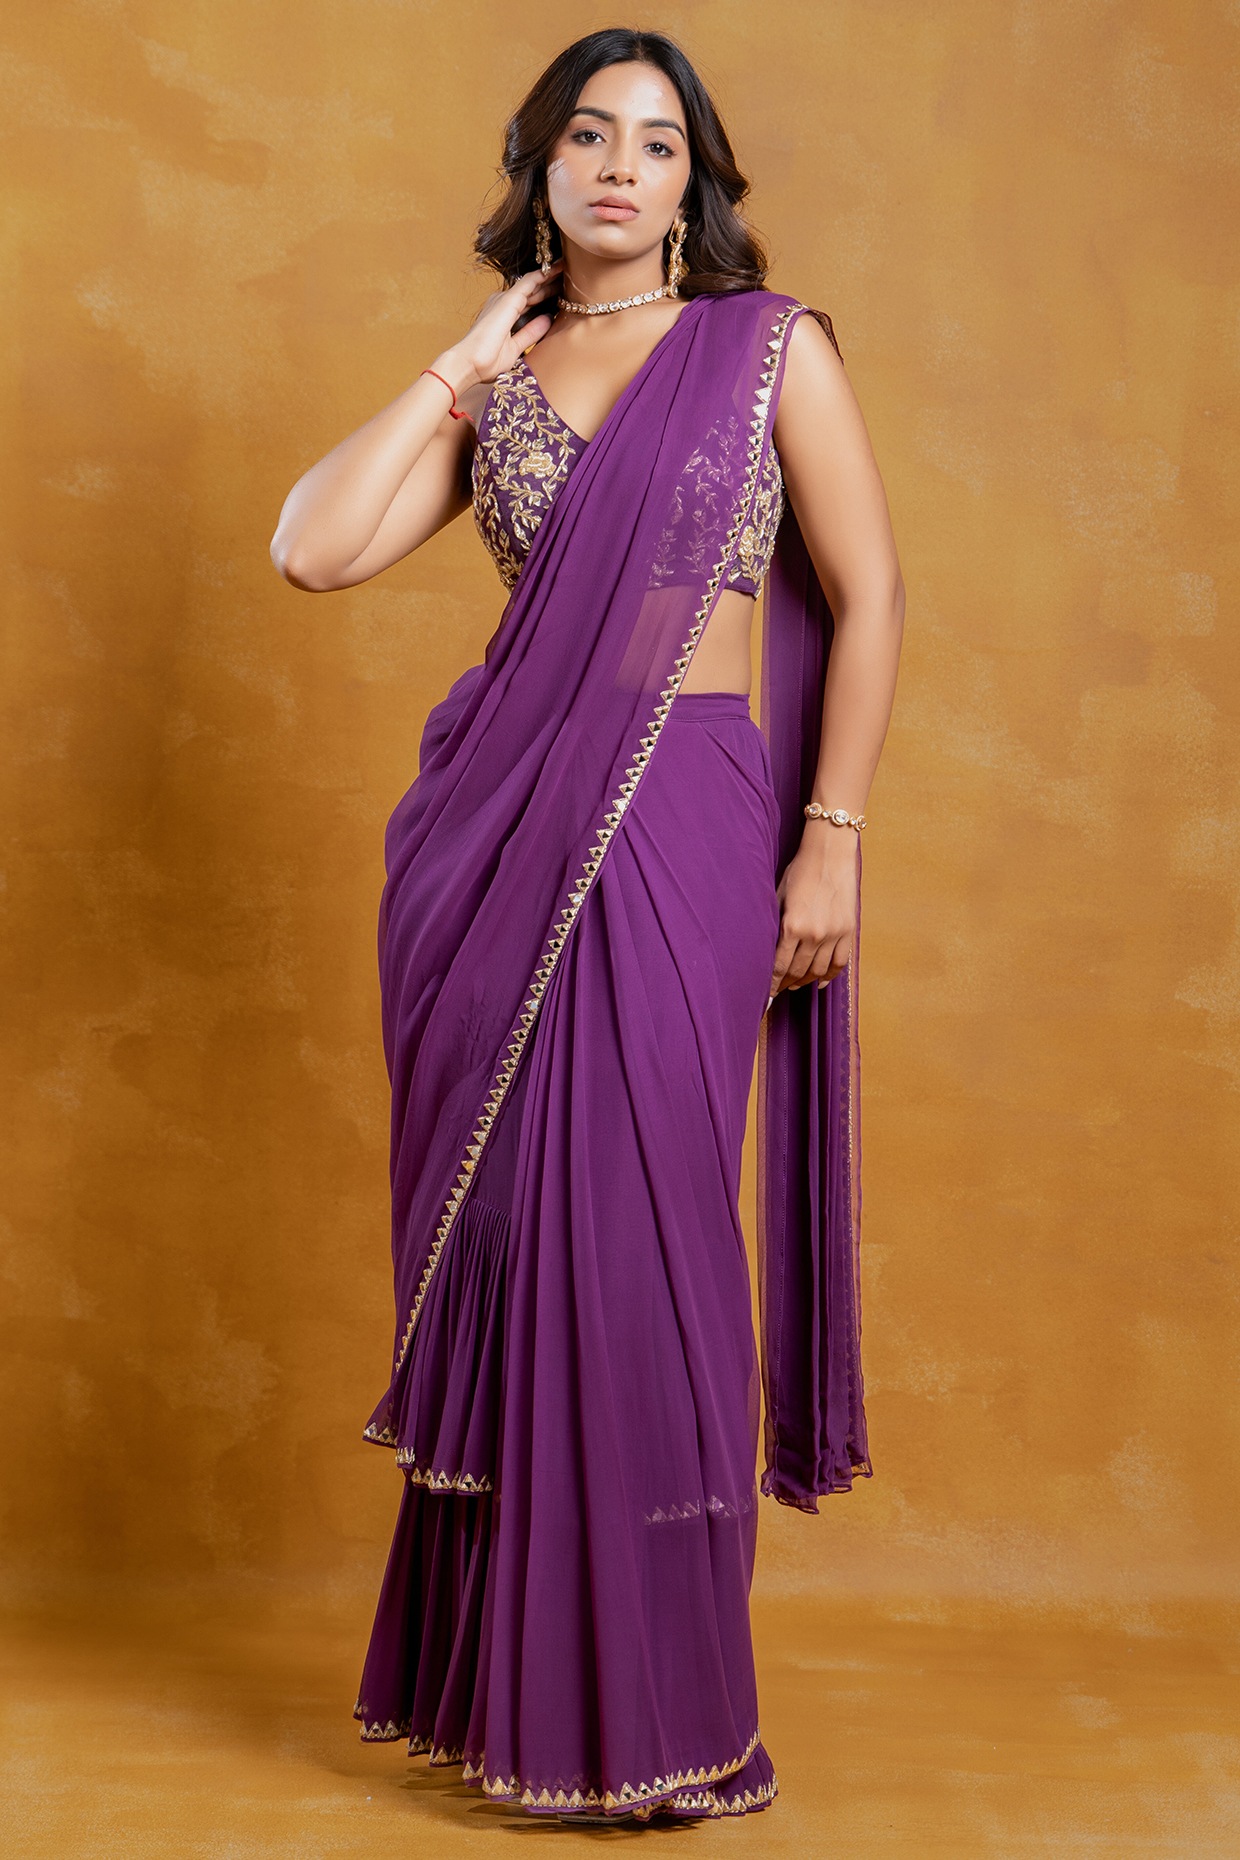 Saree not sorry✨💜 . . . . #explore #explorepage #festivewear #meesho  #meeshofinds #purple #saree #festive #ethnic #sareeblouse ... | Instagram